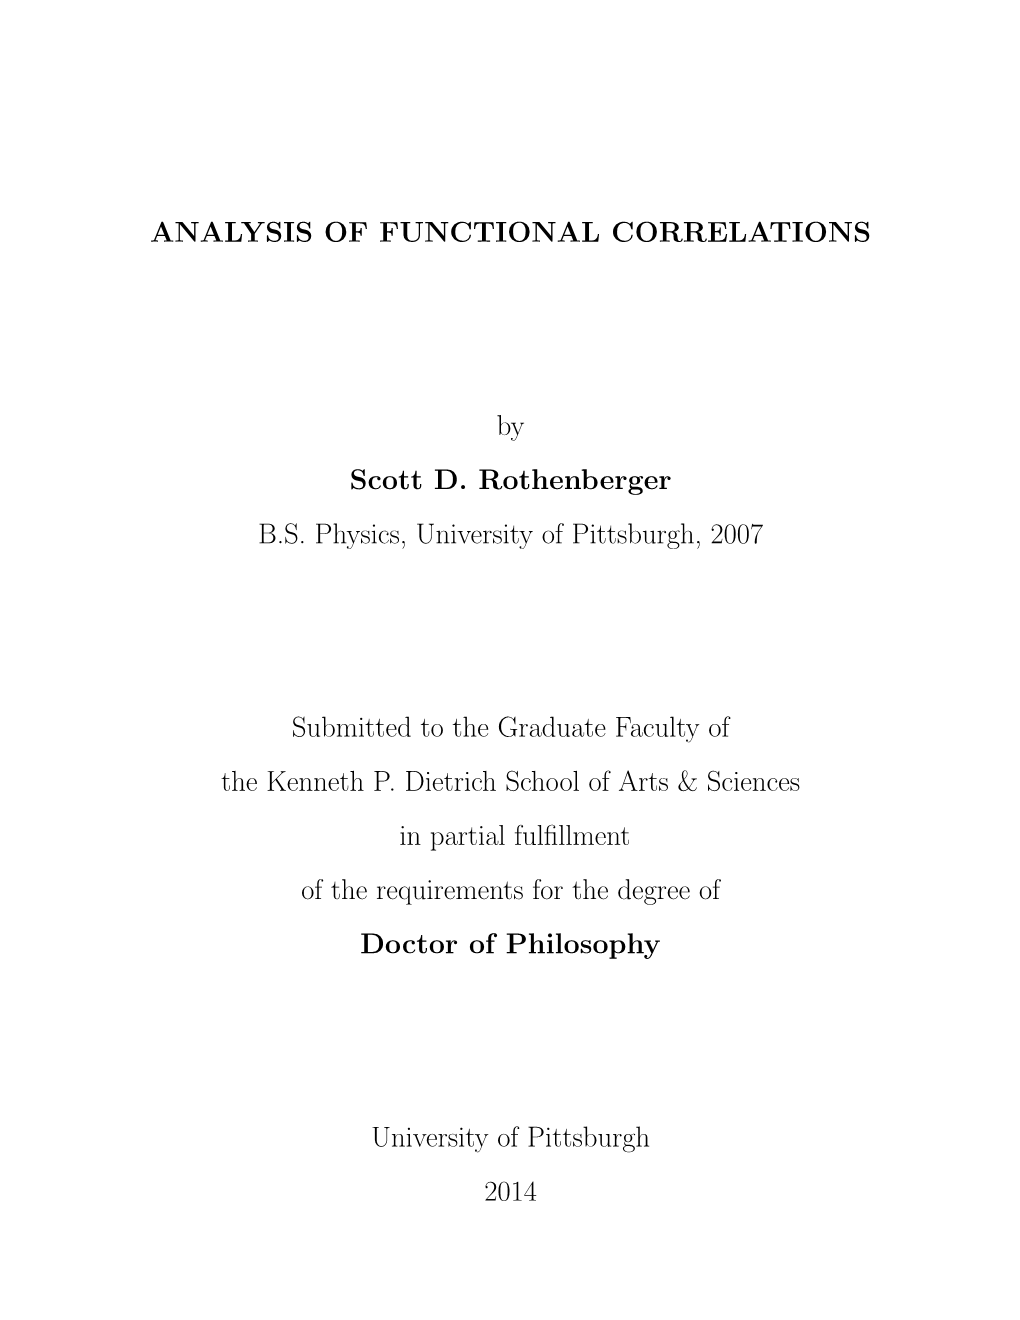 Analysis of Functional Correlations